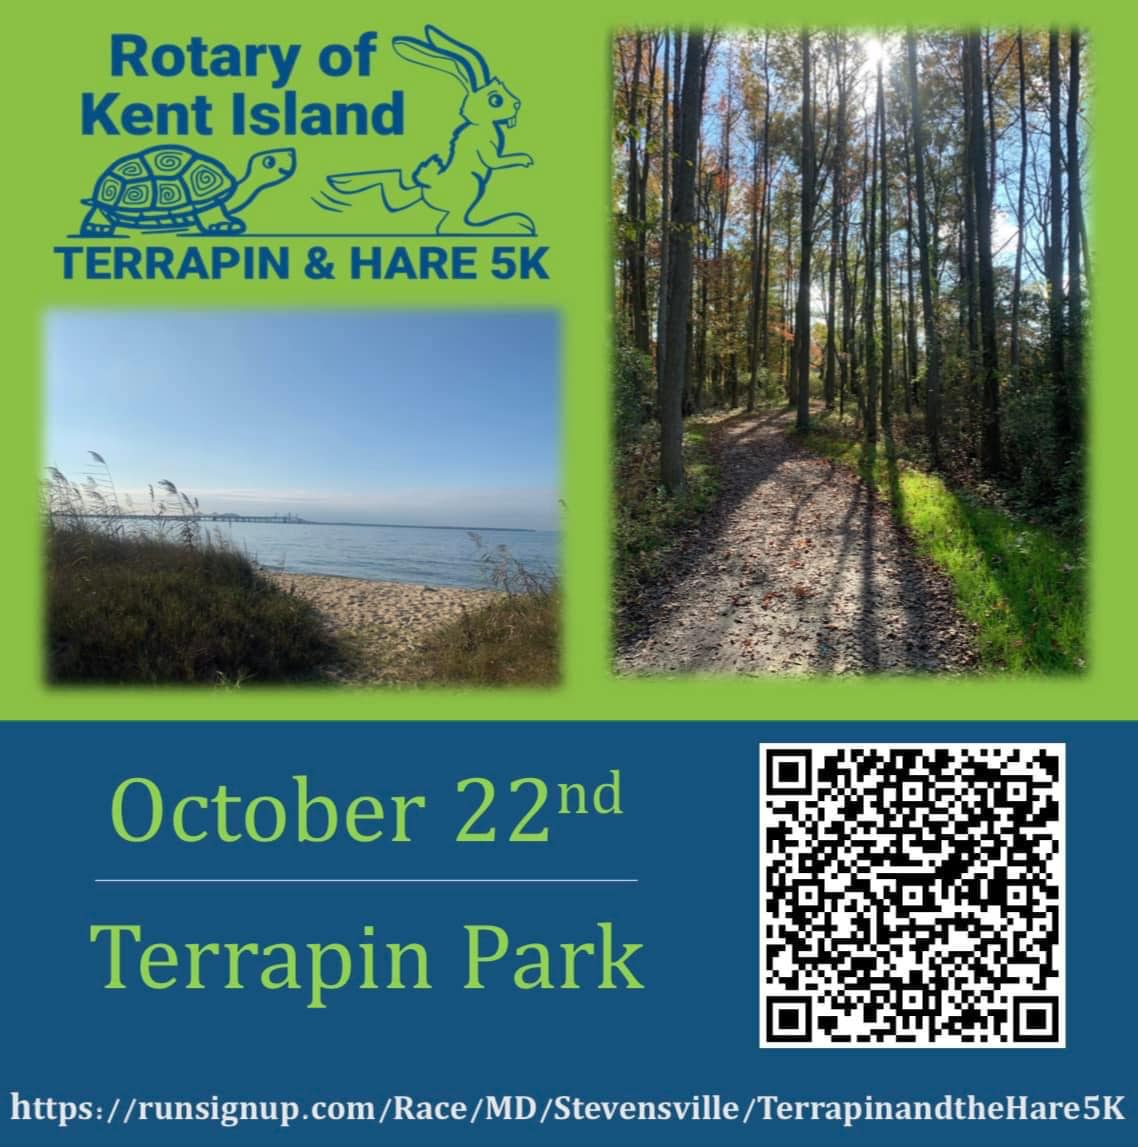 Rotary of Kent Island Terrapin & Hare 5K 2022